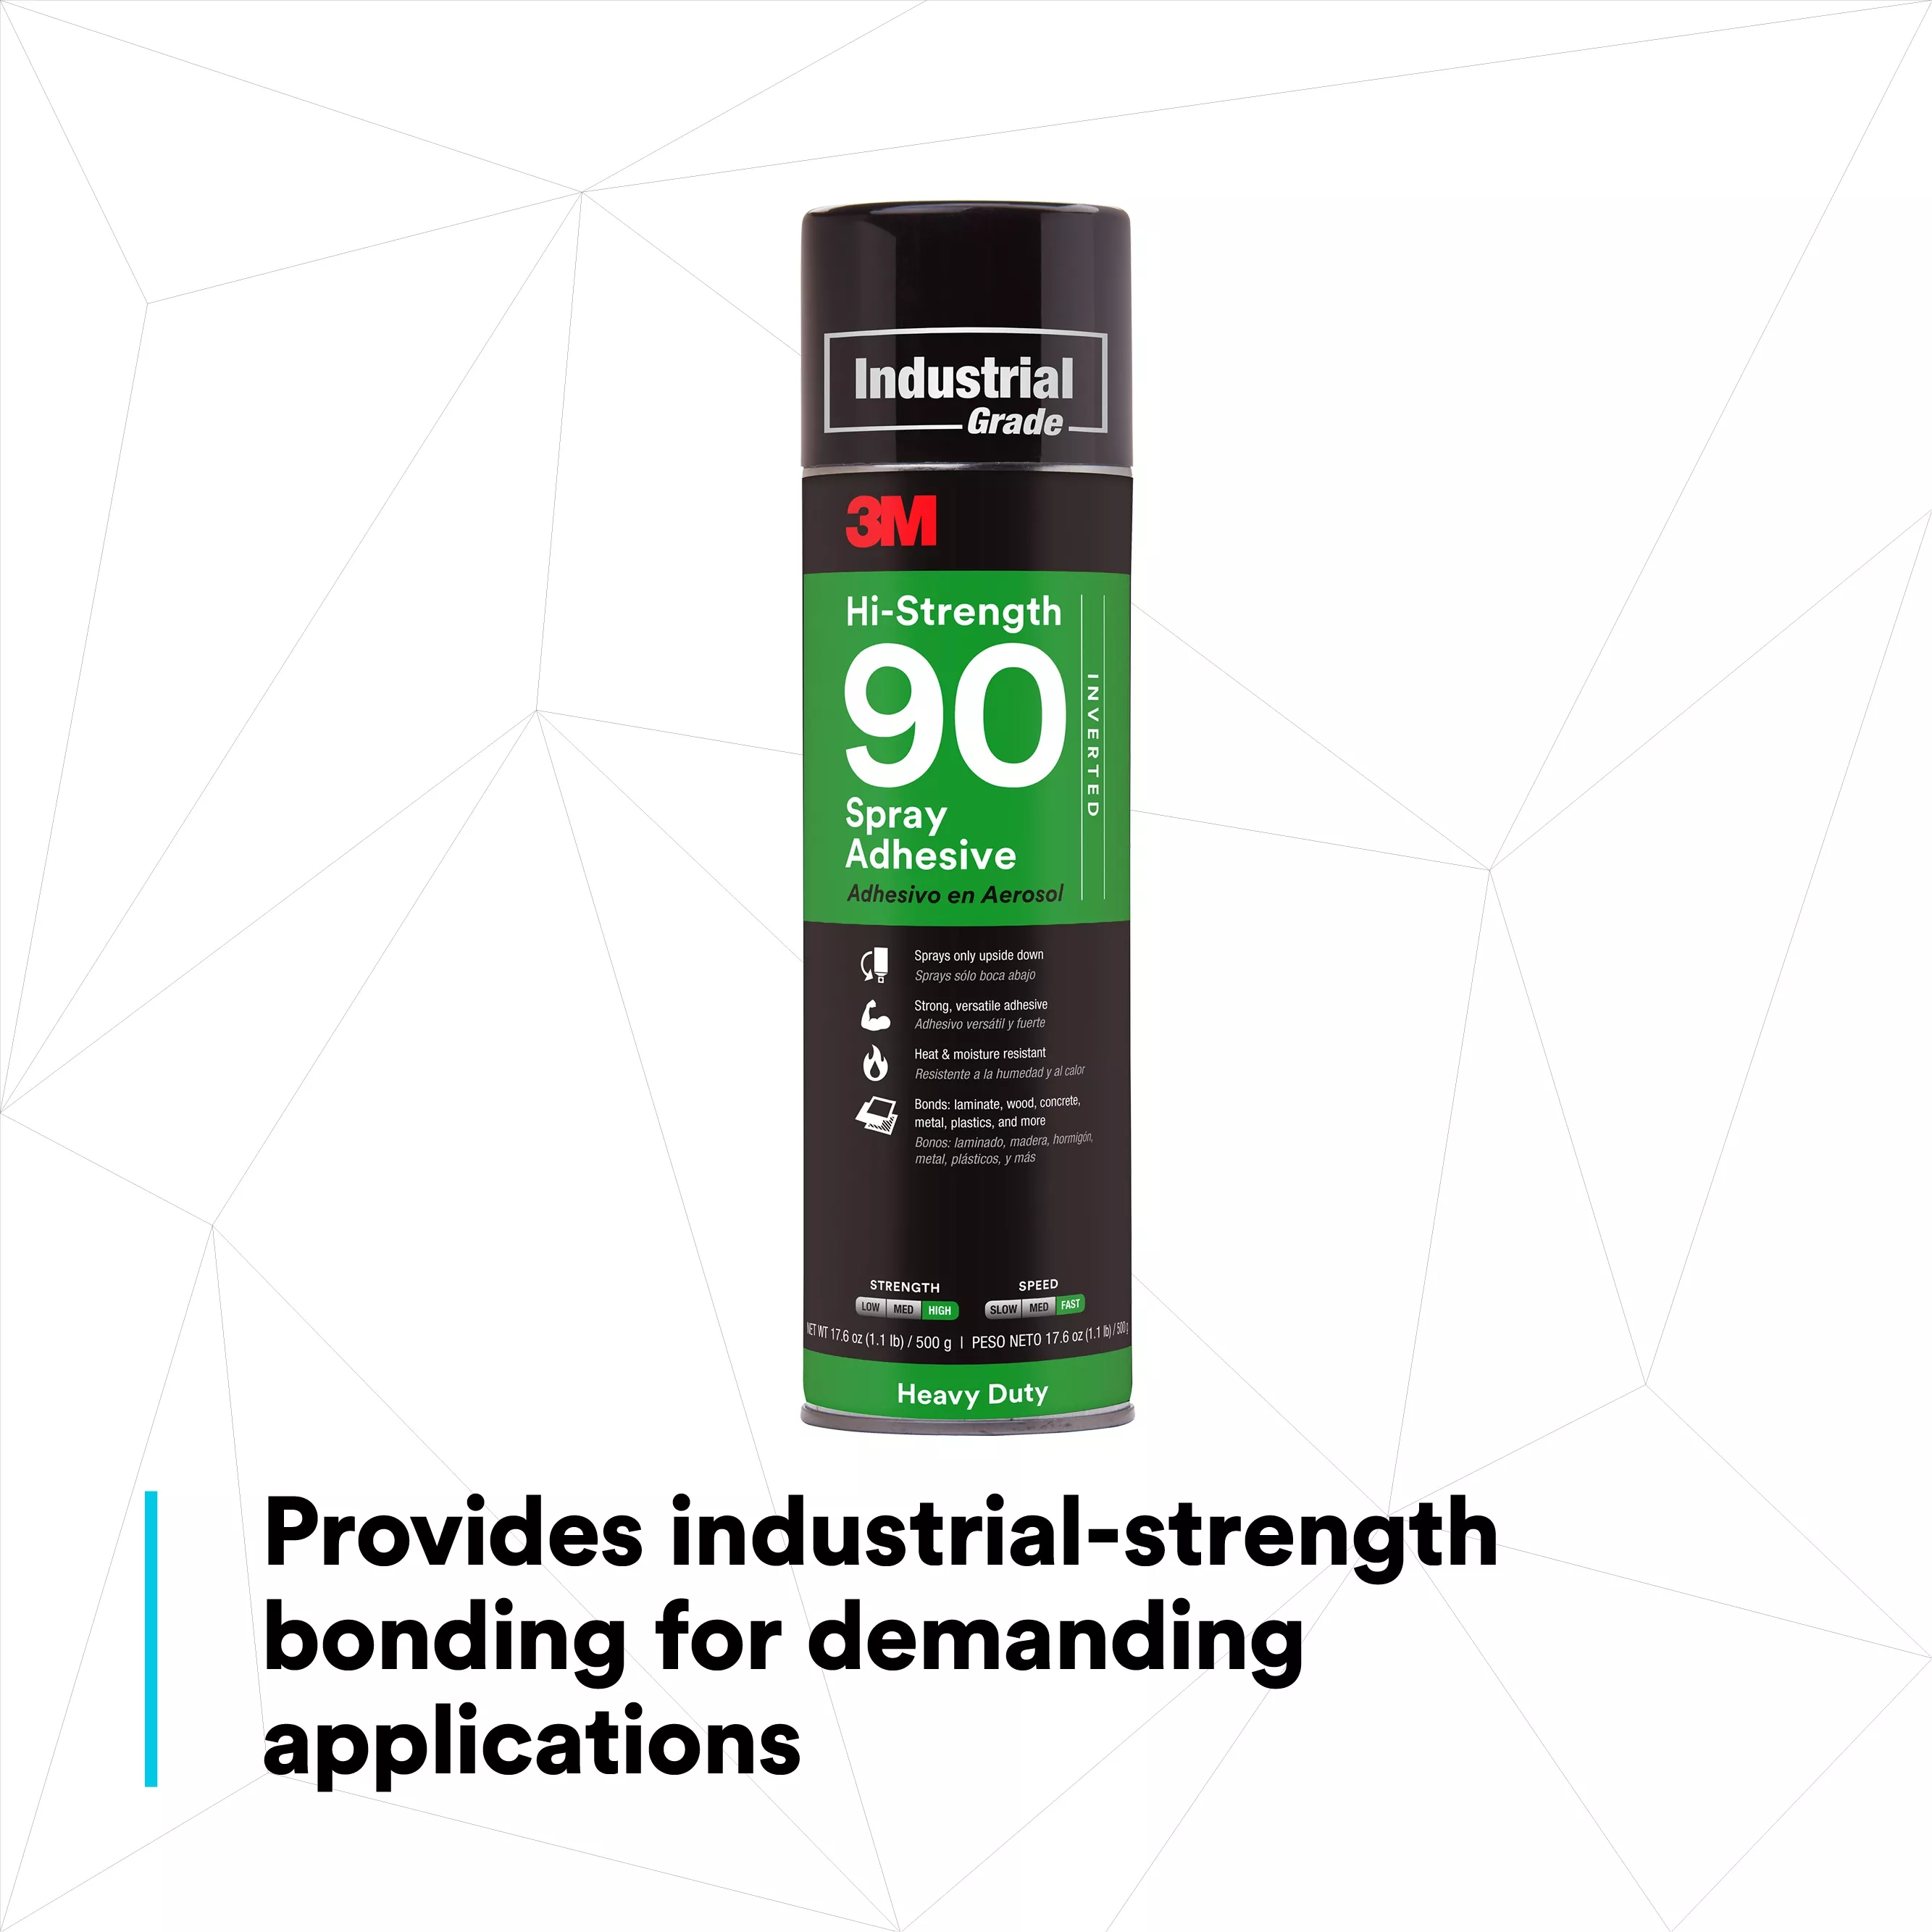 Product Number 90 | 3M™ Hi-Strength Spray Adhesive 90